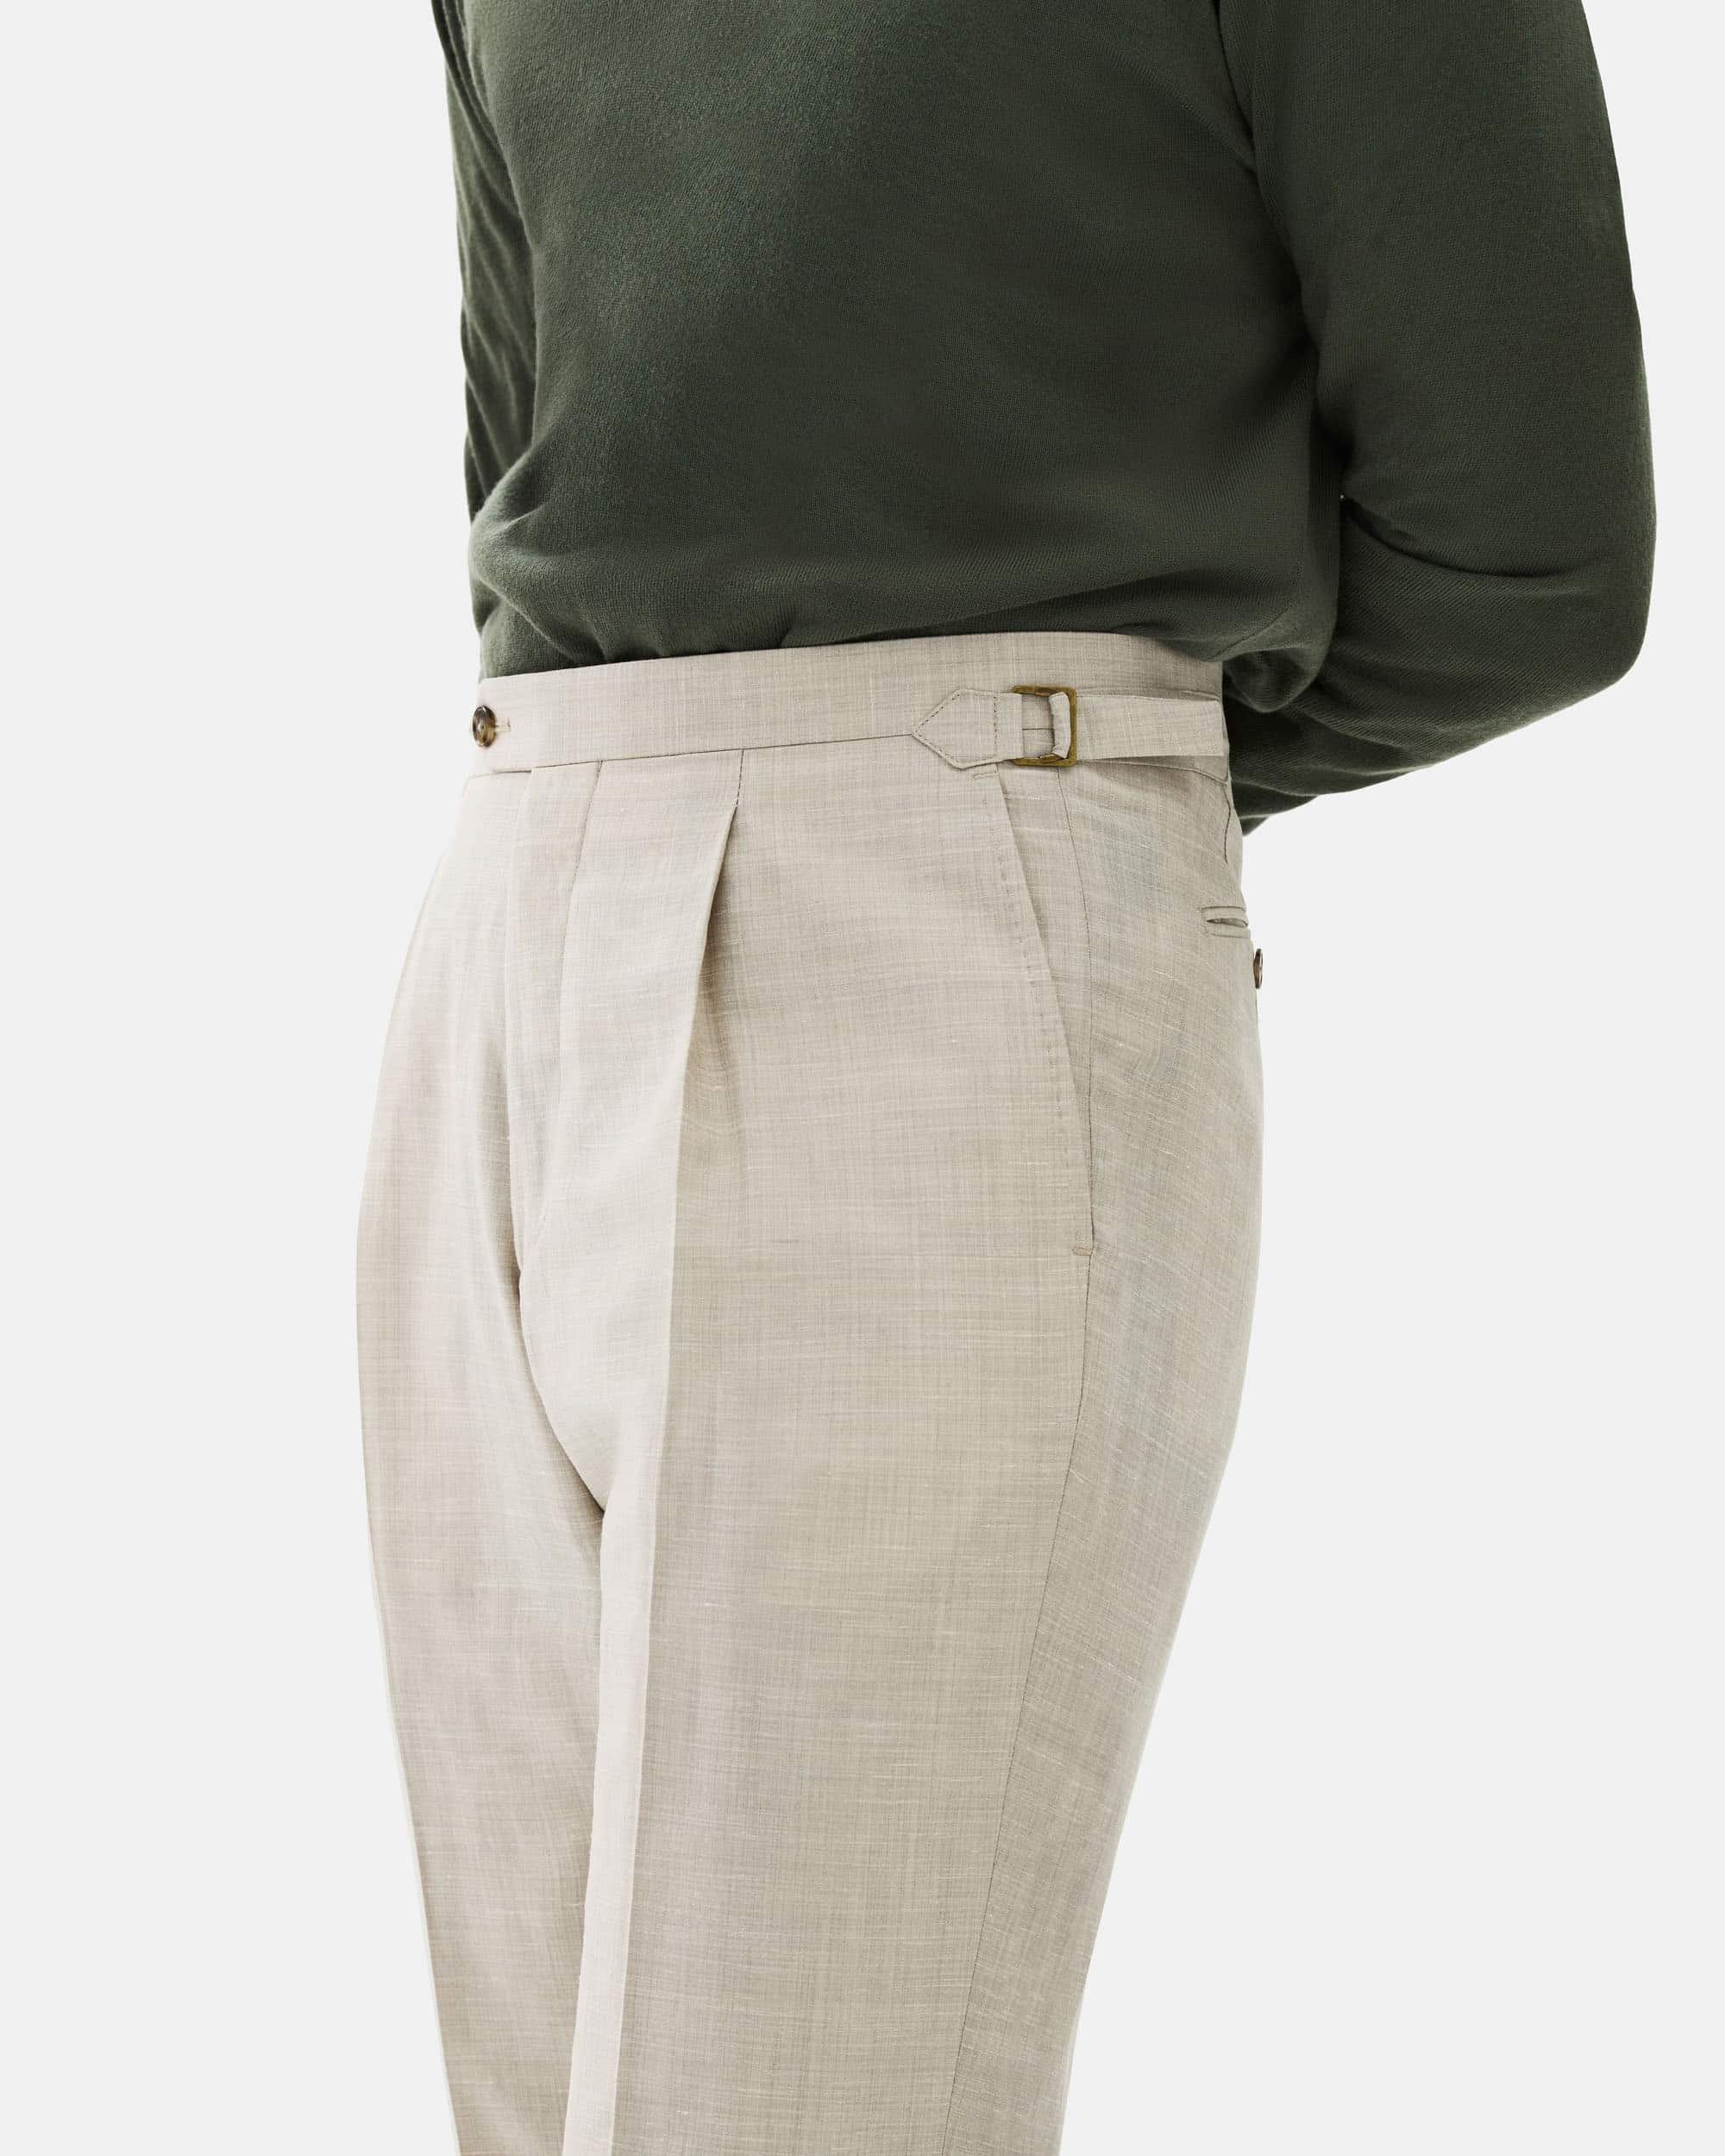 Trouser WSL beige image 2